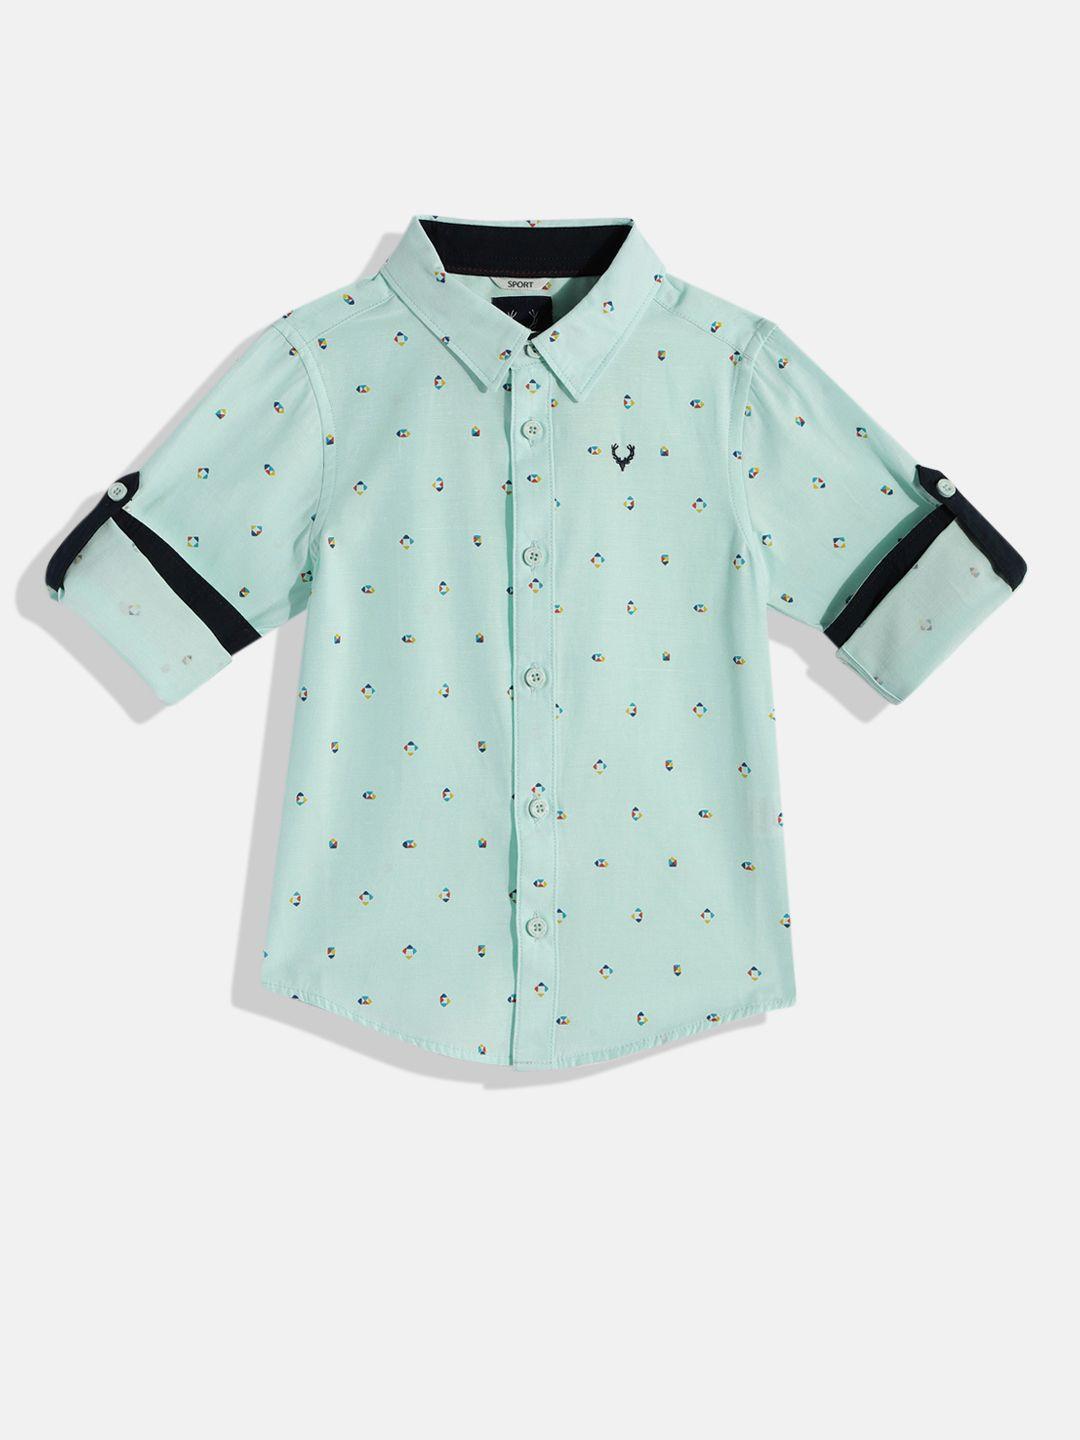 allen solly junior boys blue regular fit geometric opaque print casual shirt